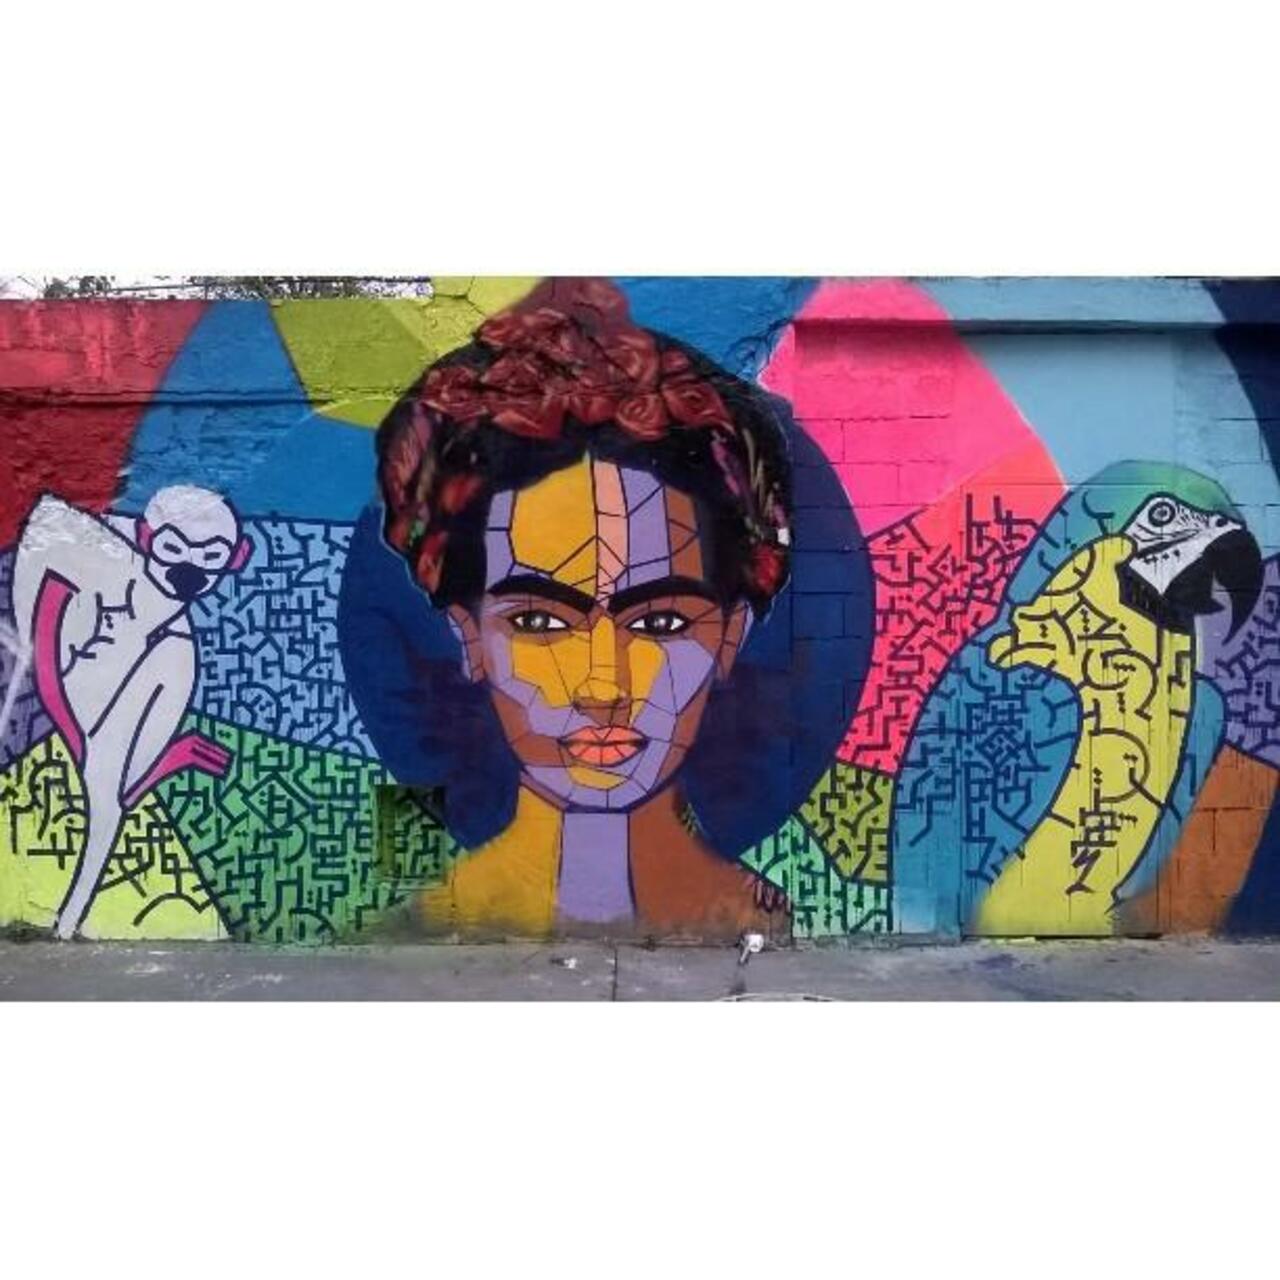 #streetart #FridaKahlo #graffiti #graff #art #fatcap #bombing #welovebombing #spraycanart #sprayart #wallart #han... http://t.co/Bhipv8eyuX